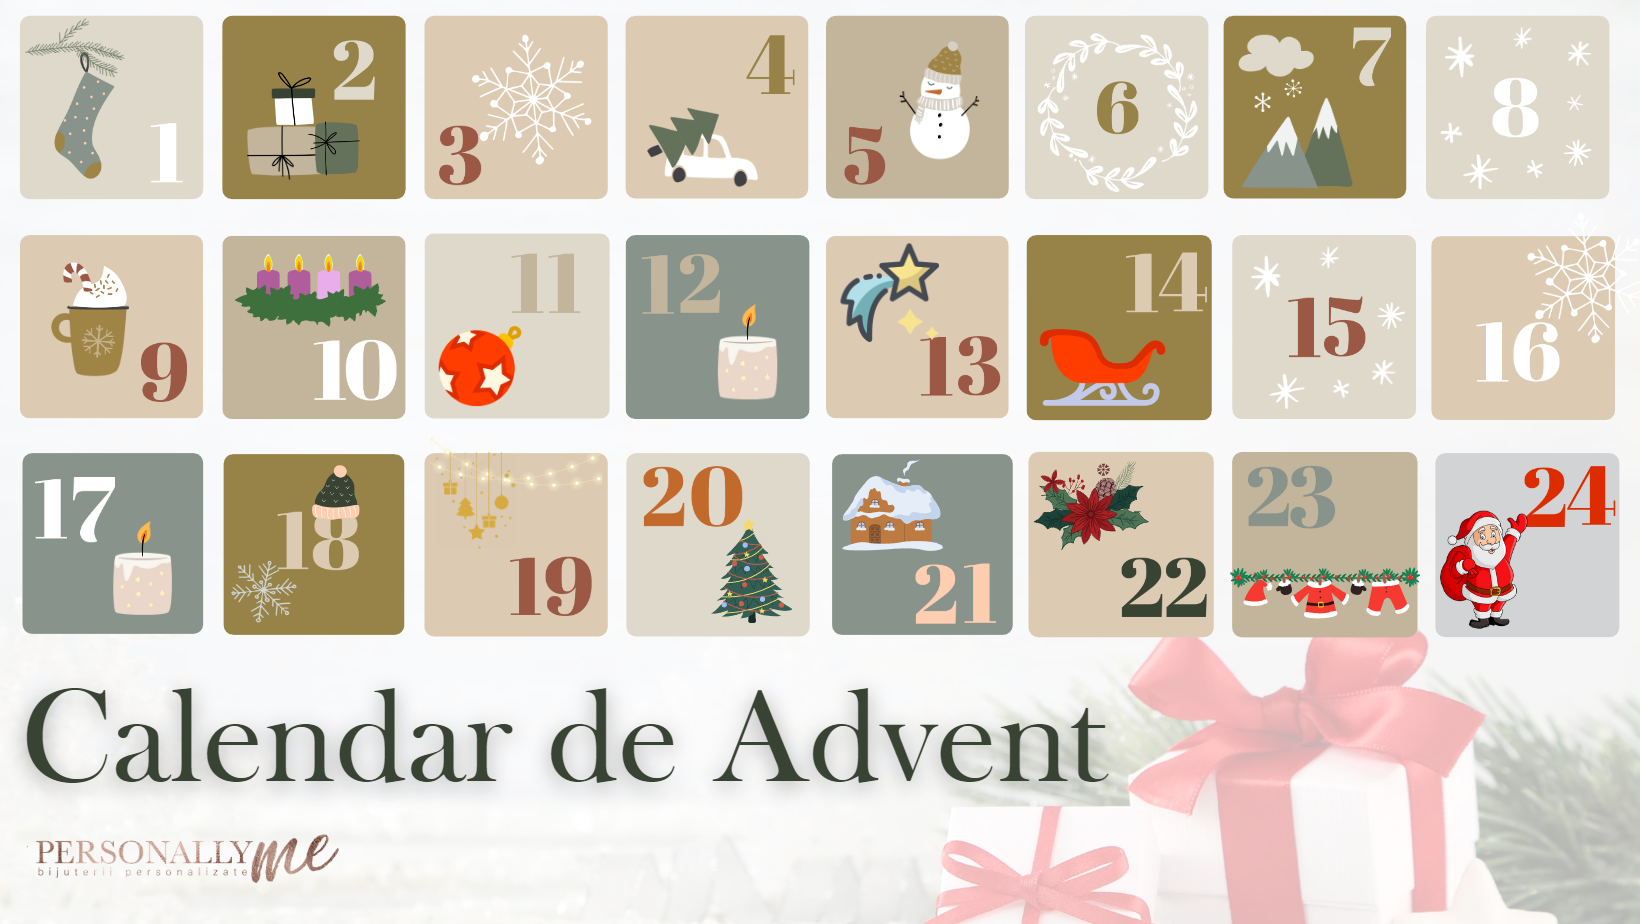 Calendarul de Advent la Personally ME